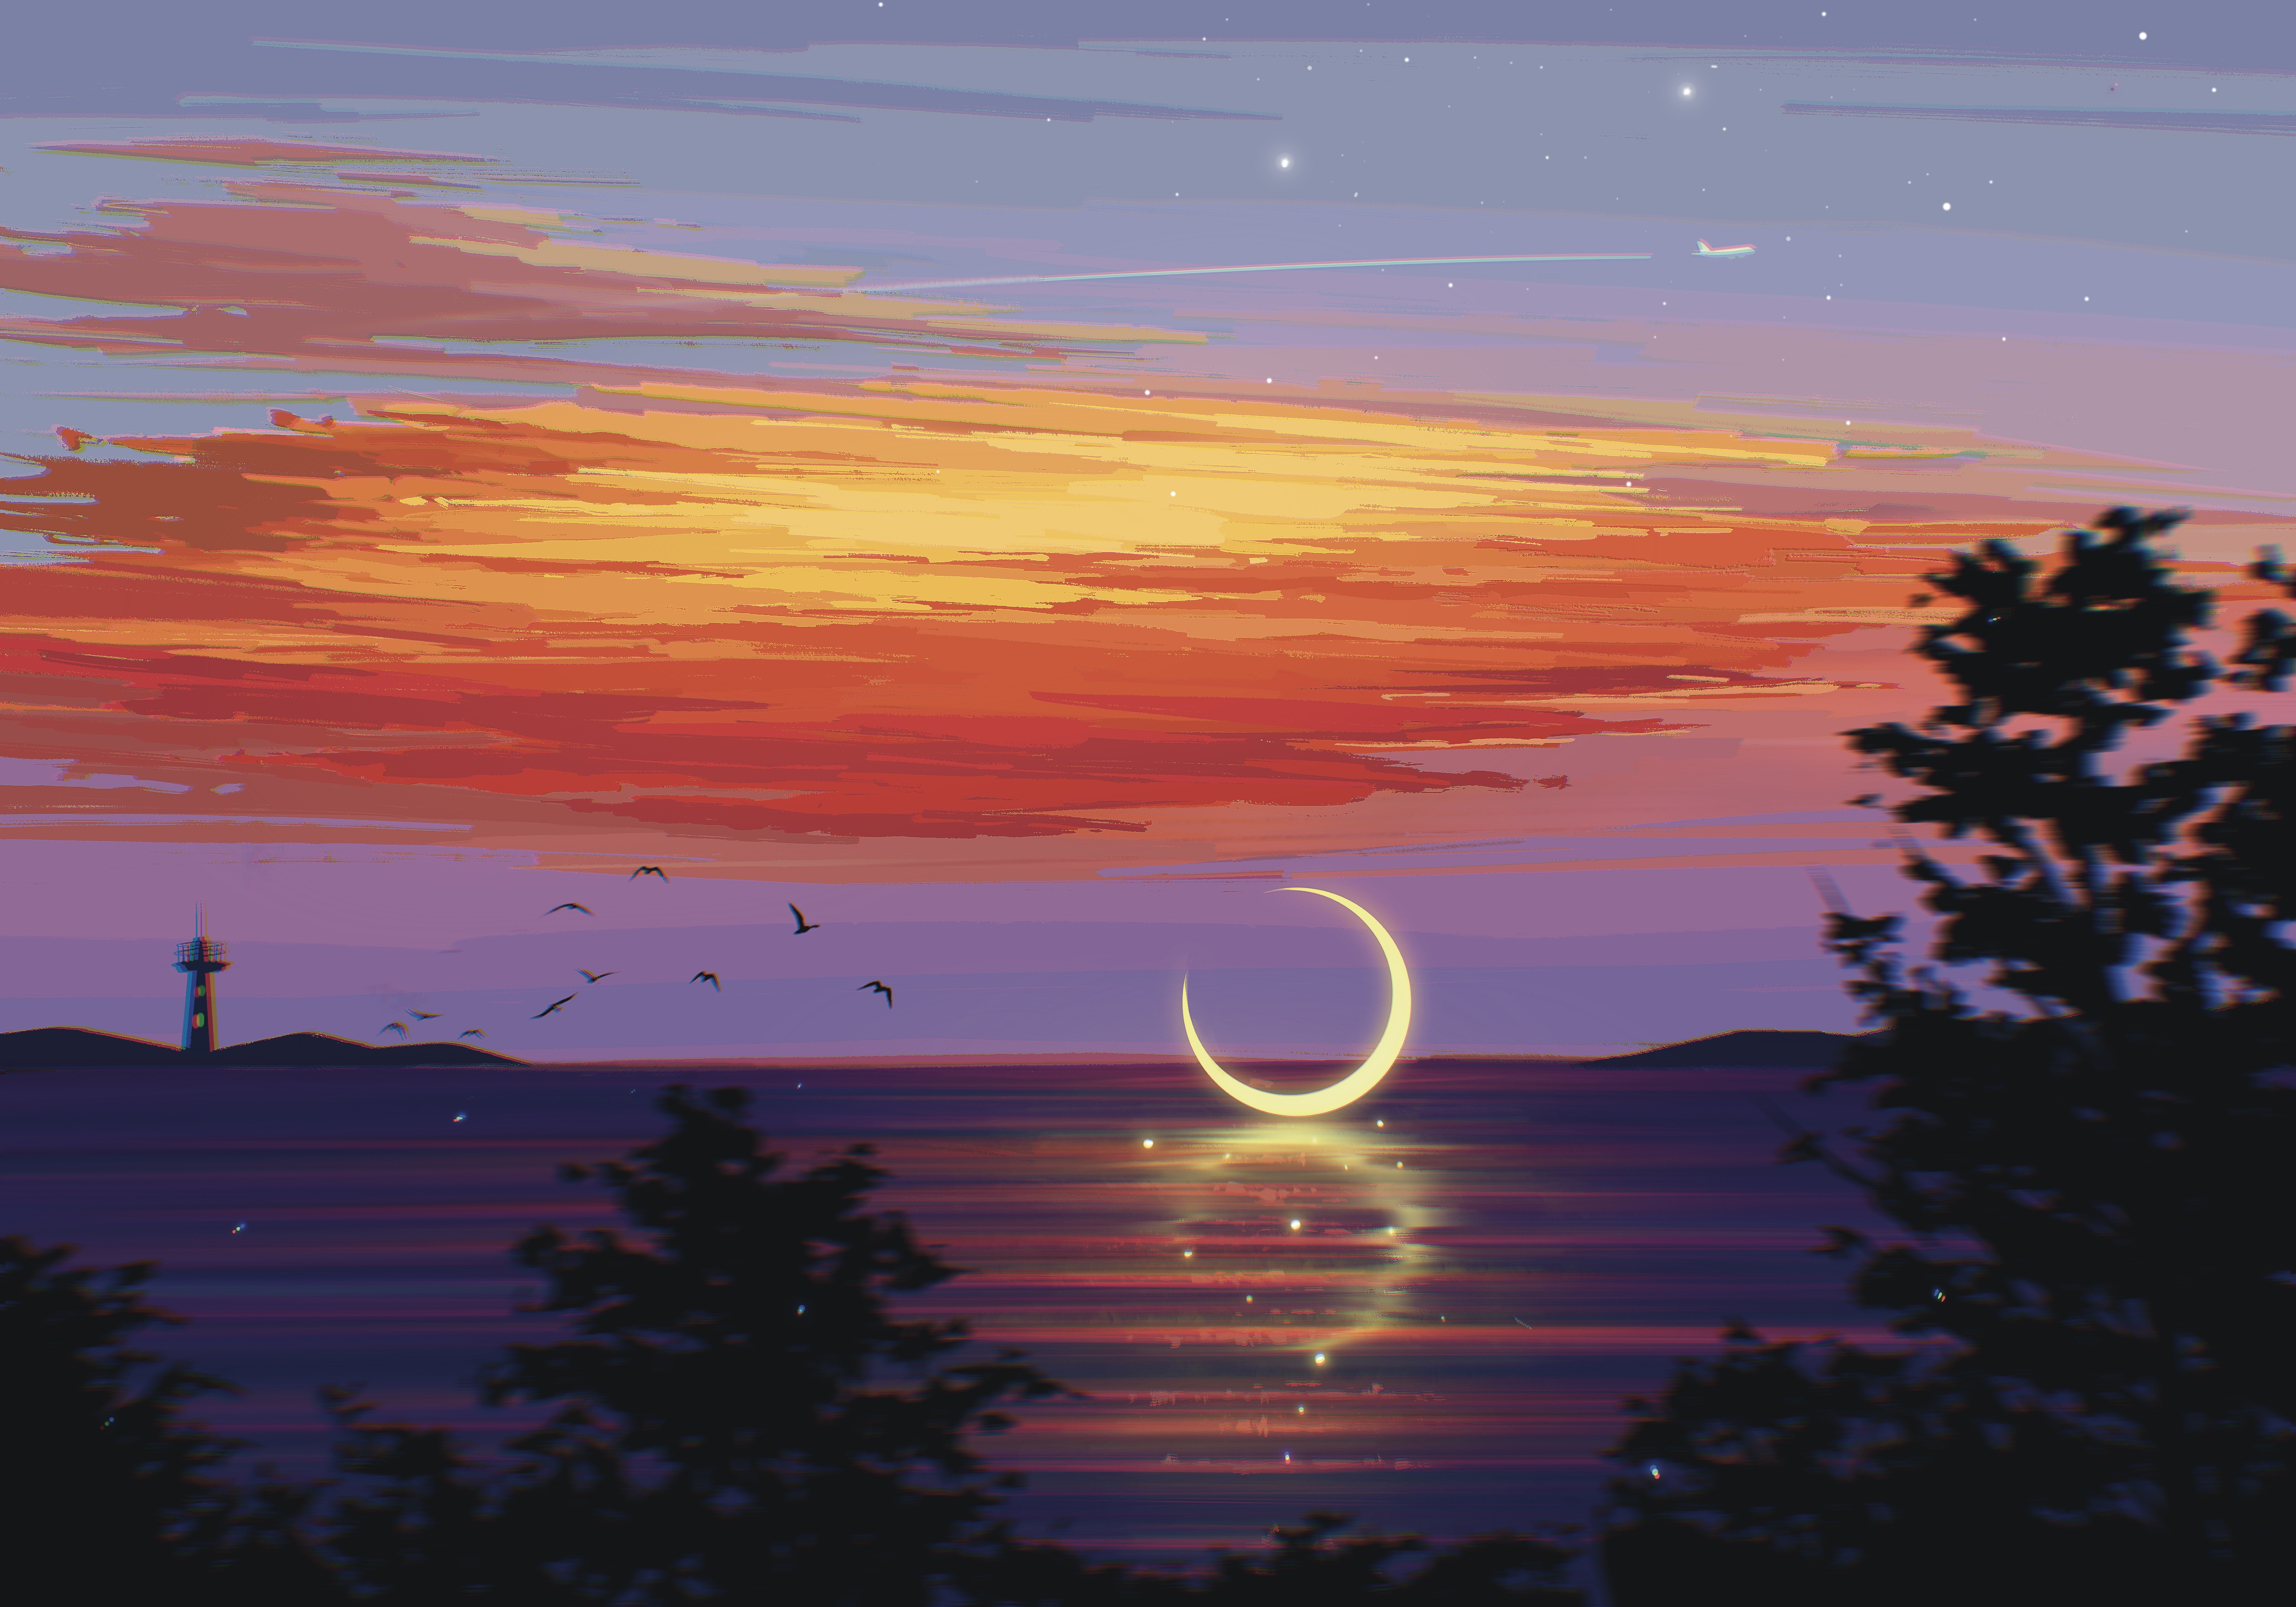 Digital Art Artwork Illustration Painting Landscape Sea Water Clouds Moon Birds Trees Sunset Airplan 4724x3307